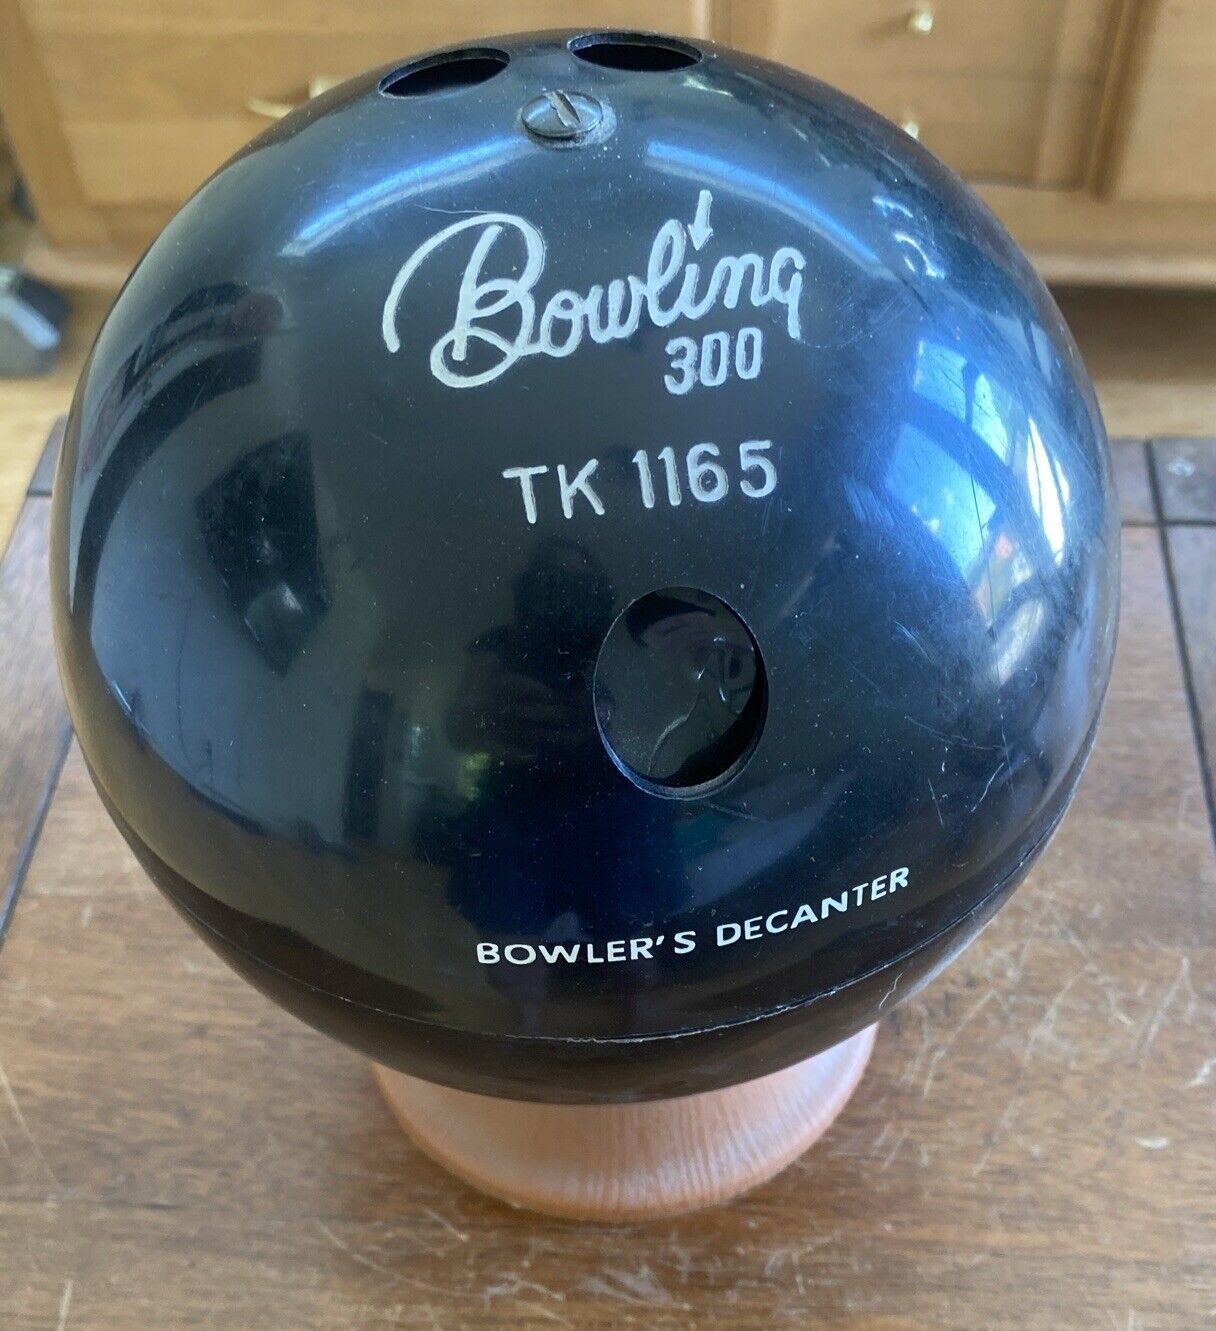 VTG 60s Kitch Bowling Ball 300 TK 1165 Decanter Shot Glass ice bucket Hidden Bar